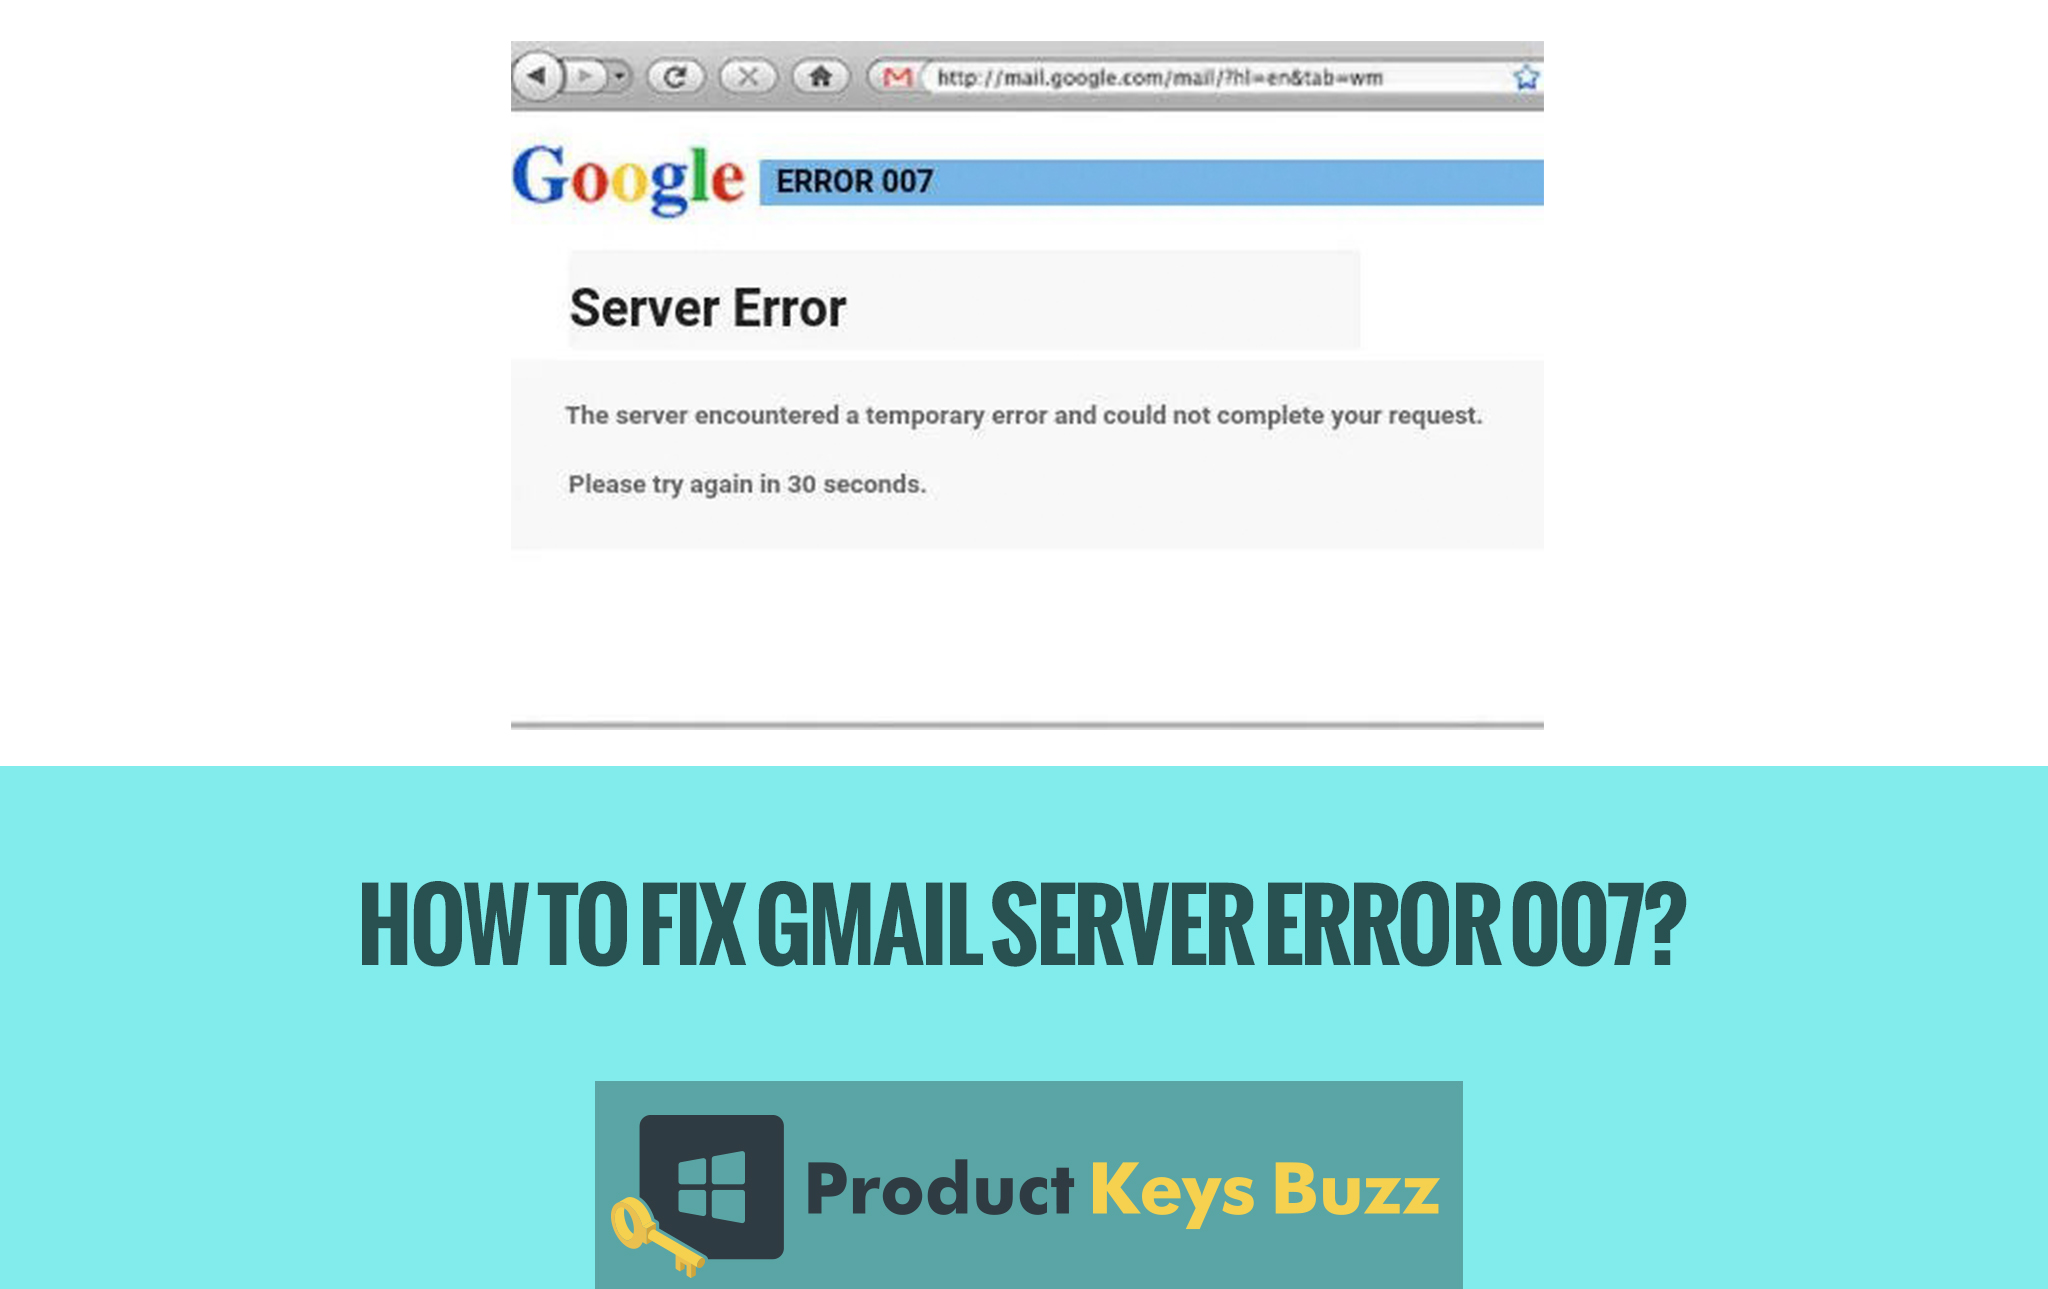 How to Fix Gmail Server Error 007